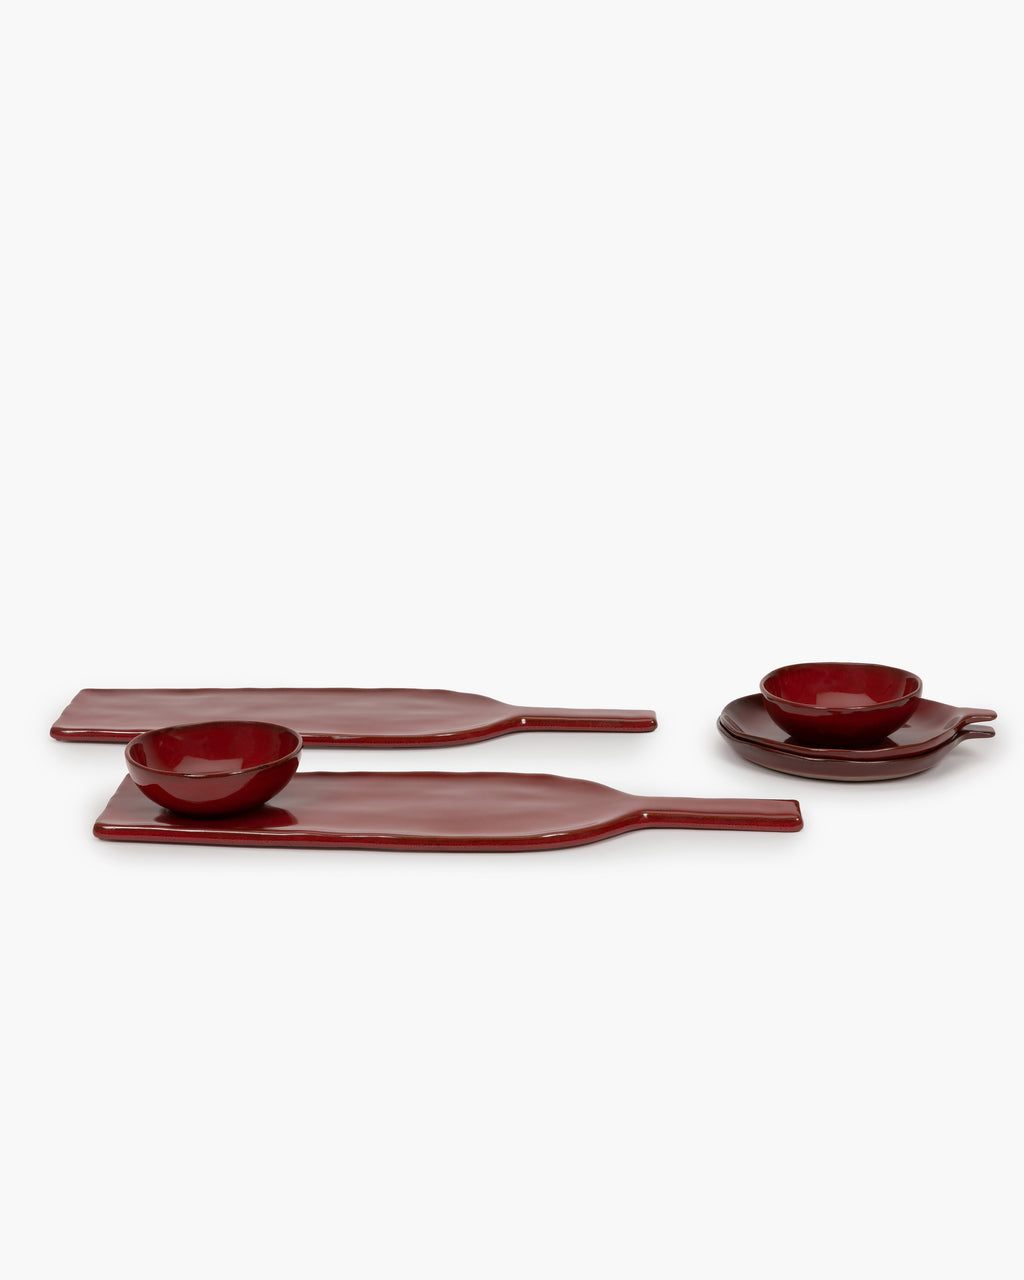 Apero set 12 pieces - La Mère tableware by Marie Michielssen - venetian red